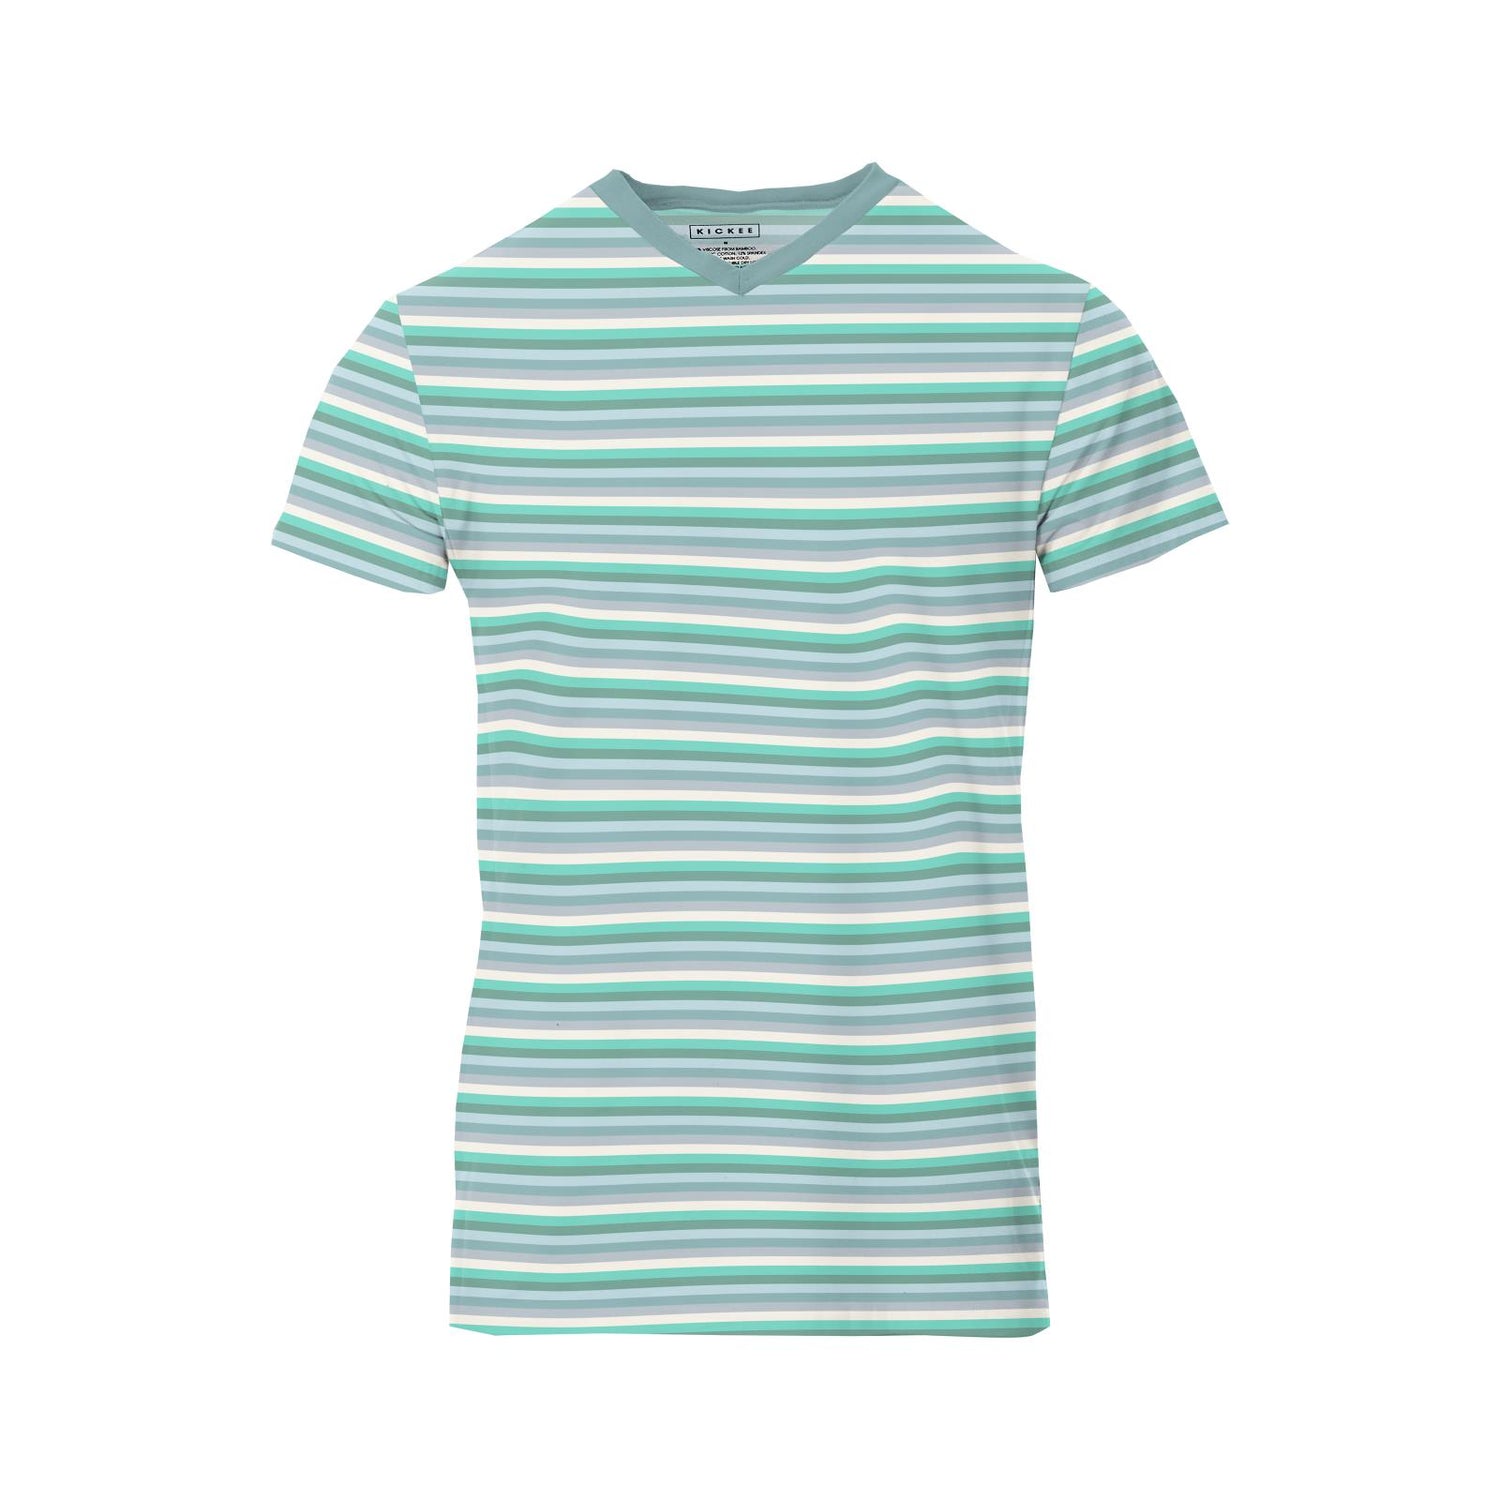 Men's Print Short Sleeve Luxe Jersey V-Neck Tee in April Showers Stripe